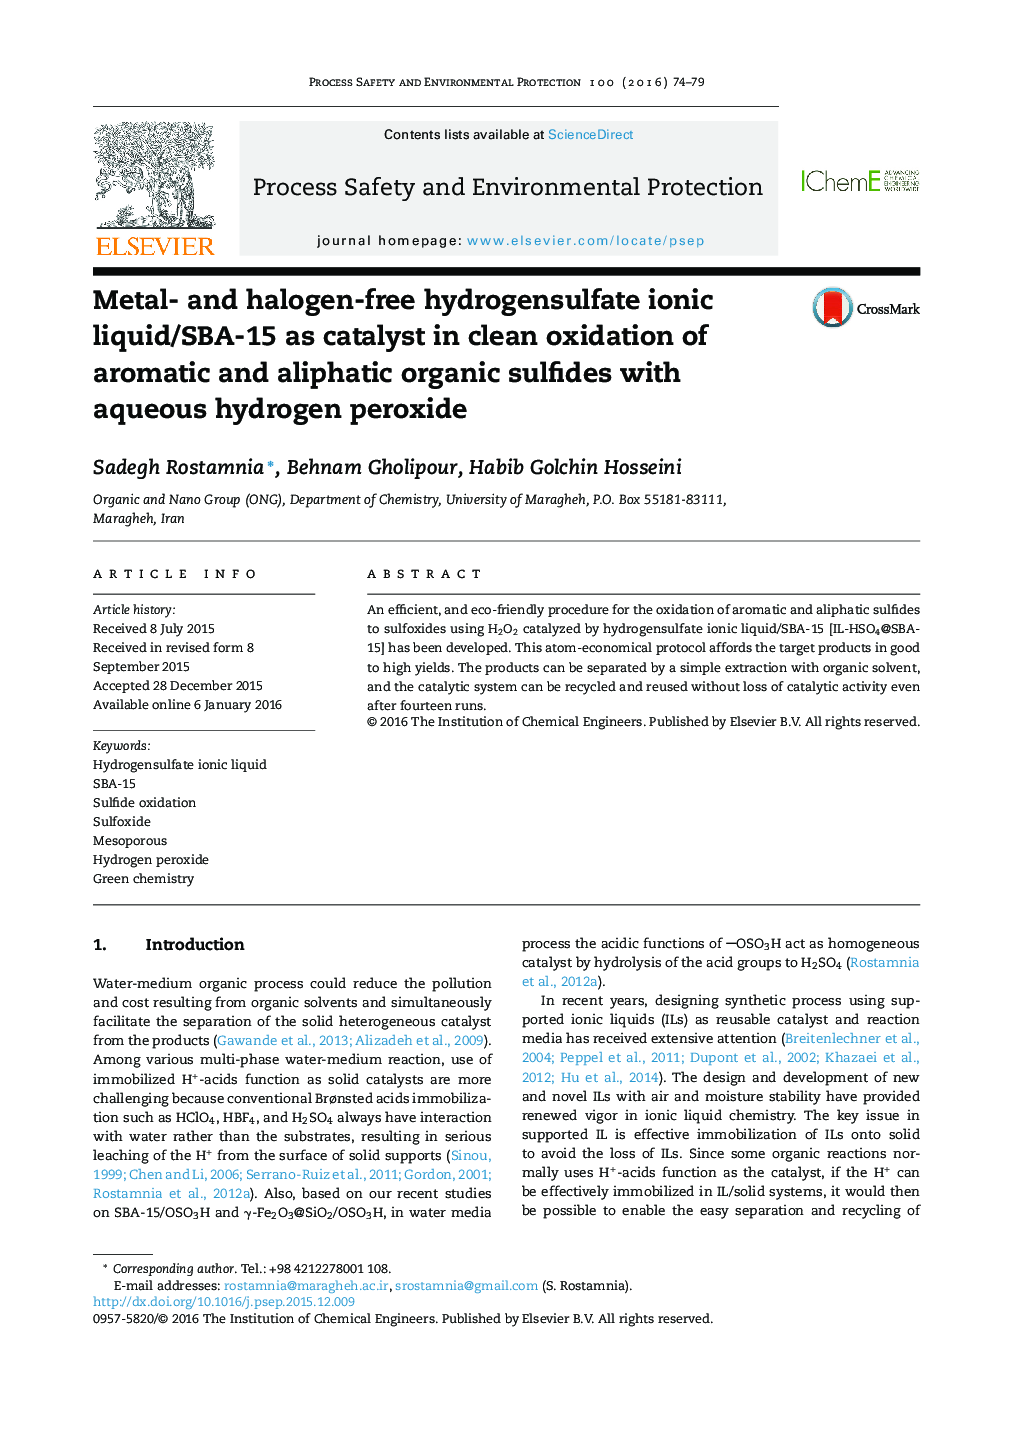 SBA-15/مایع یونی hydrogensulfate بدون هالوژن و فلز به عنوان کاتالیزور در اکسیداسیون تمیز سولفیدهای آلی آلیفاتیک و آروماتیک با پراکسید هیدروژن آبی 